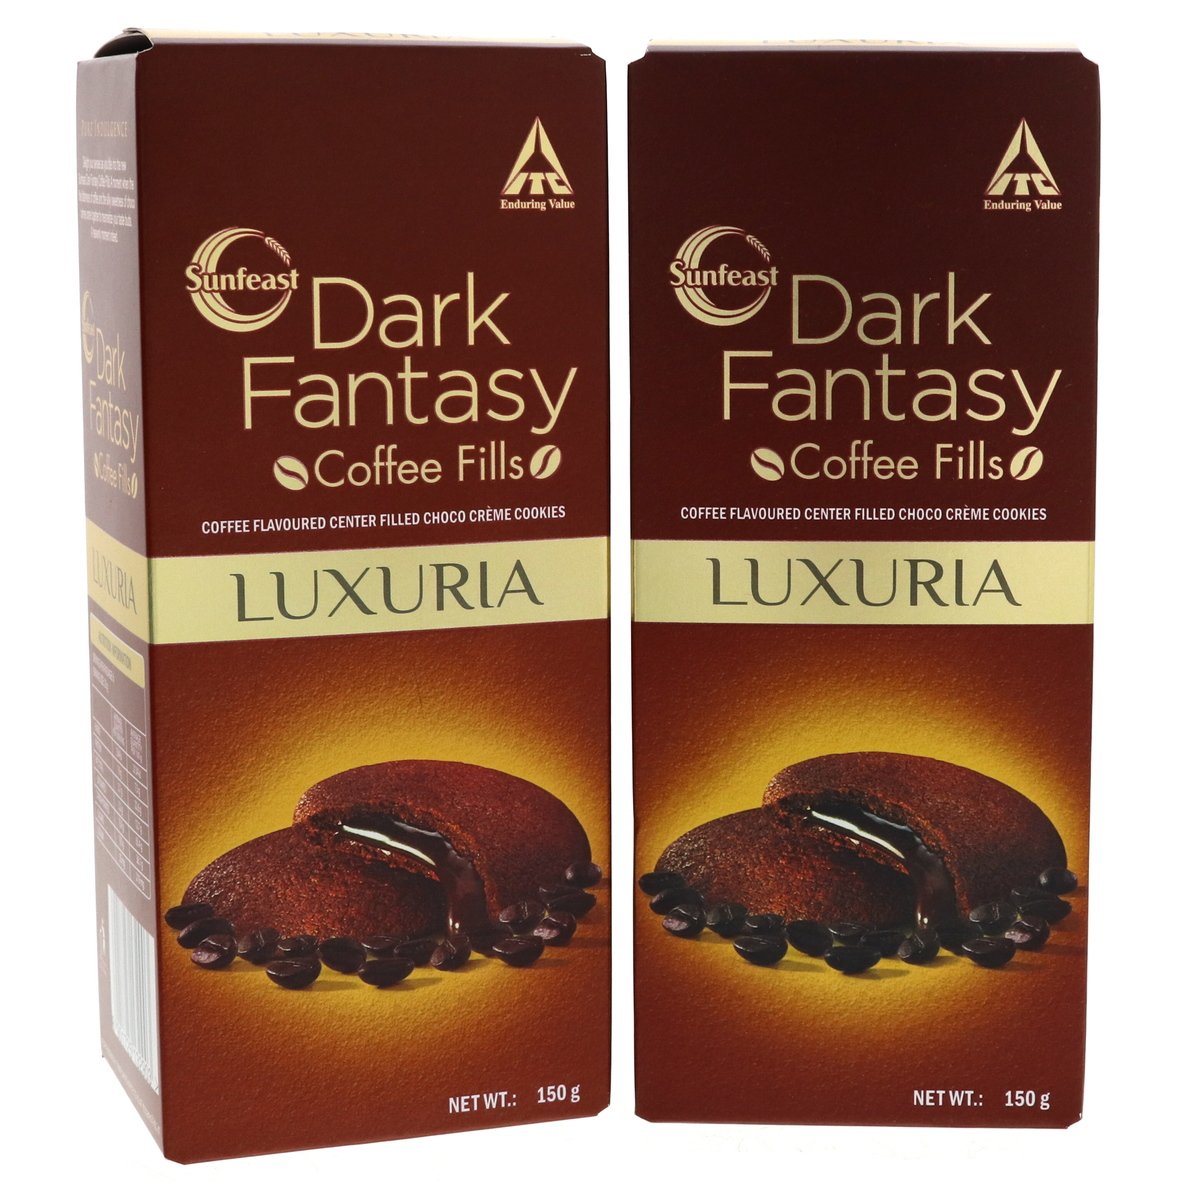 Sunfeast Dark Fantasy Coffee Fills 2 x 150 g